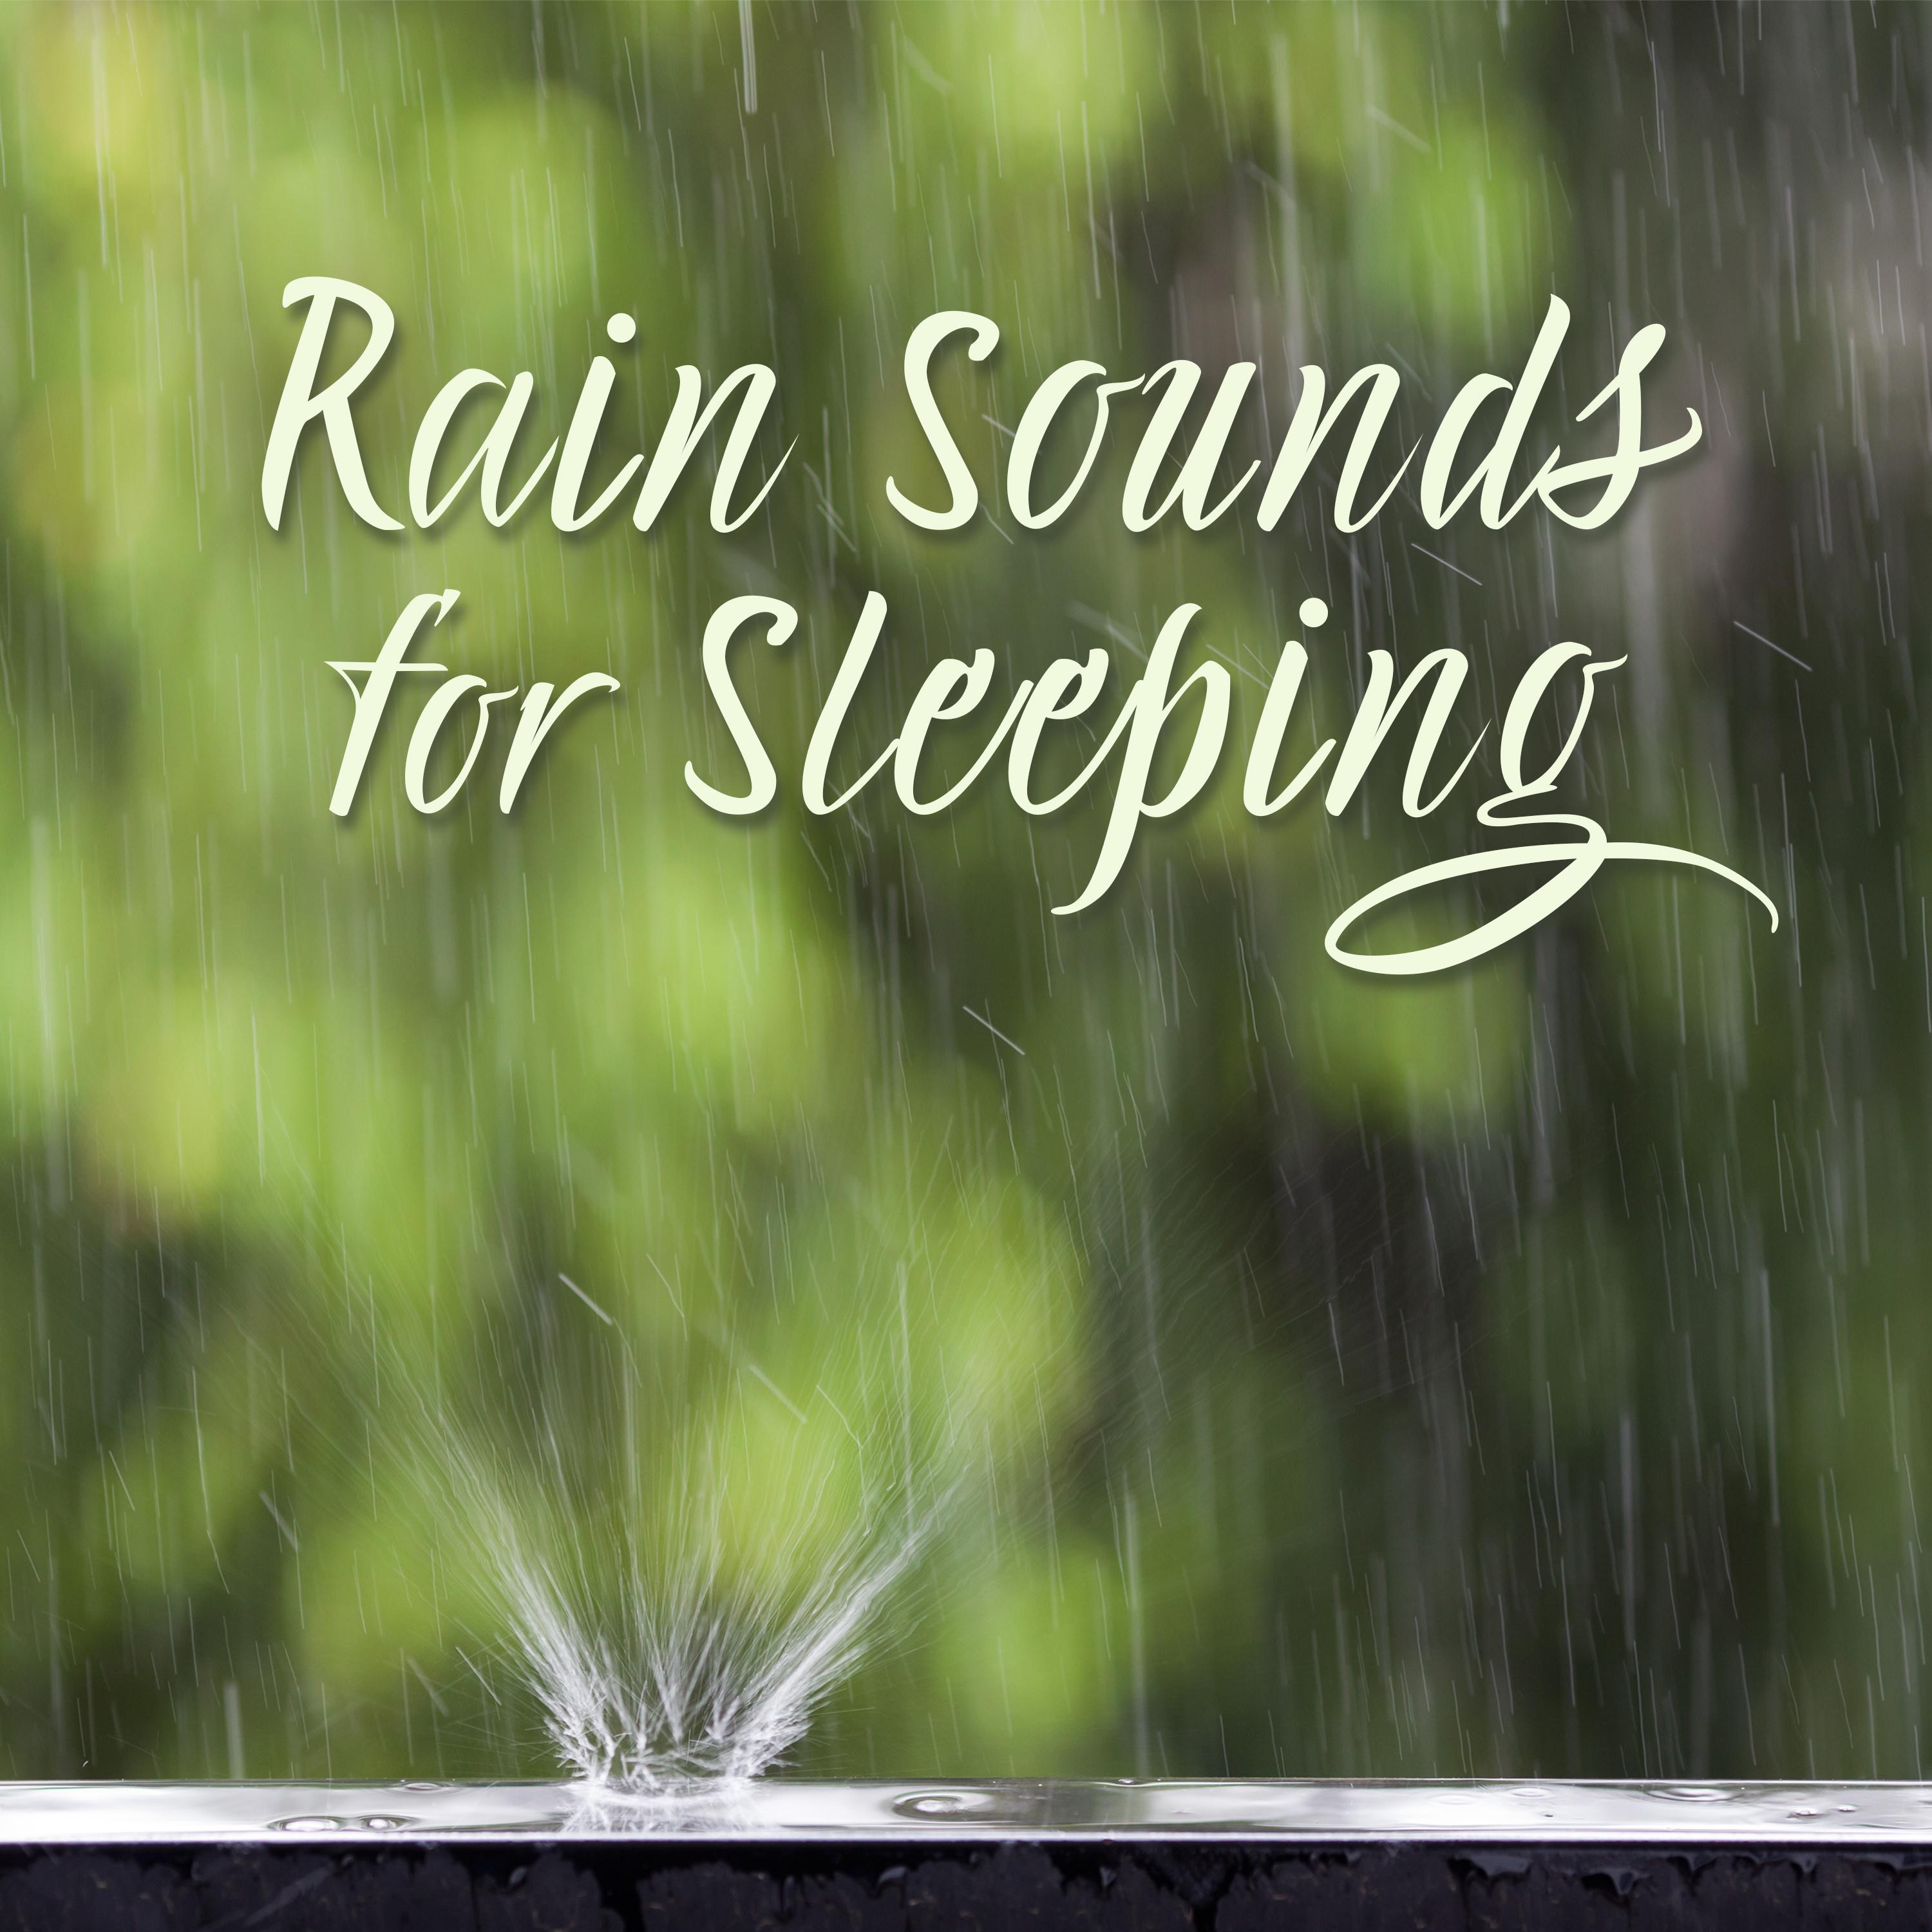 Sounds to Help You Sleep